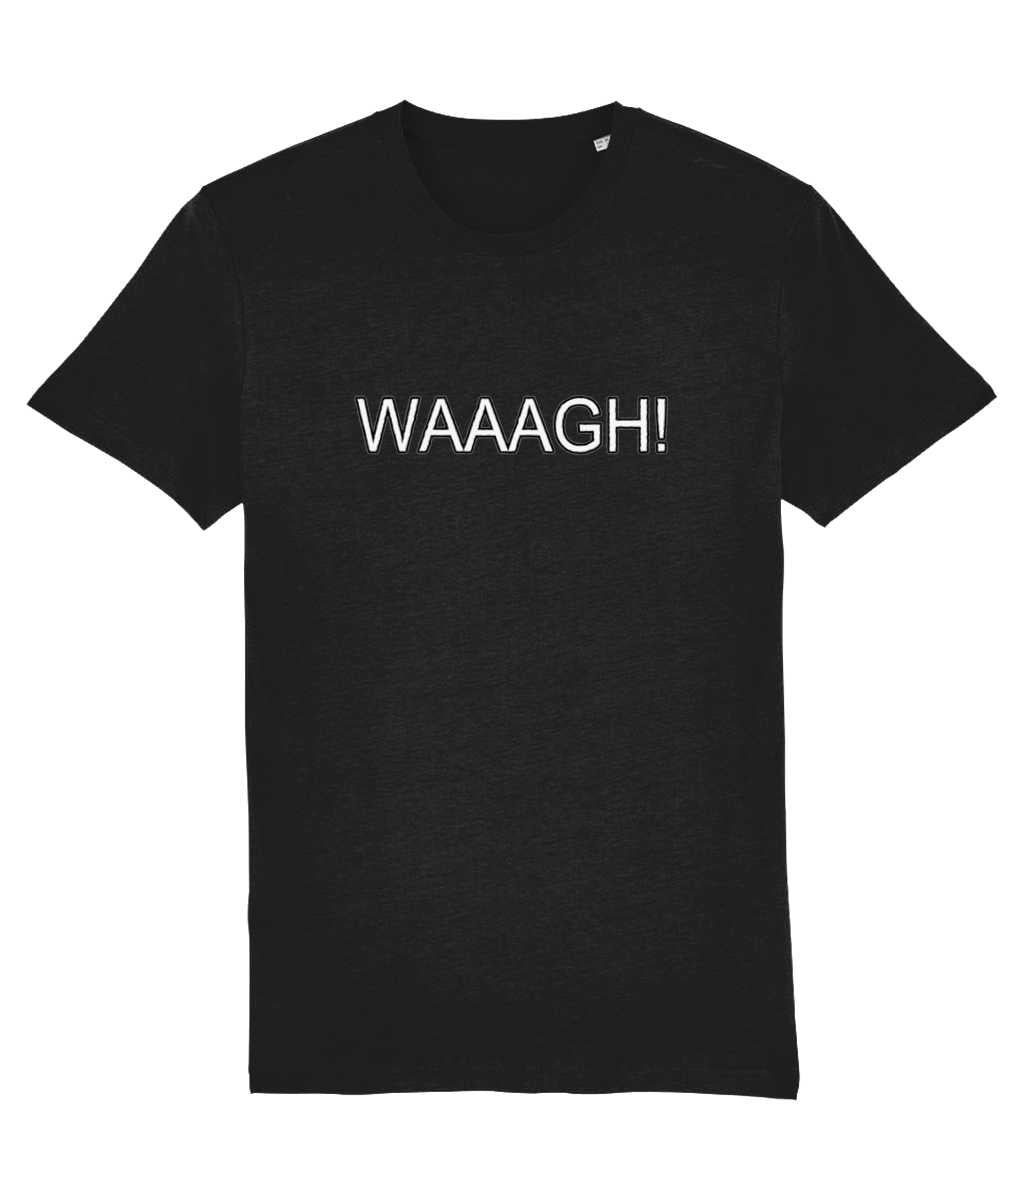 Waaagh! non gender organic T-shirt Cherchez La Femme brand